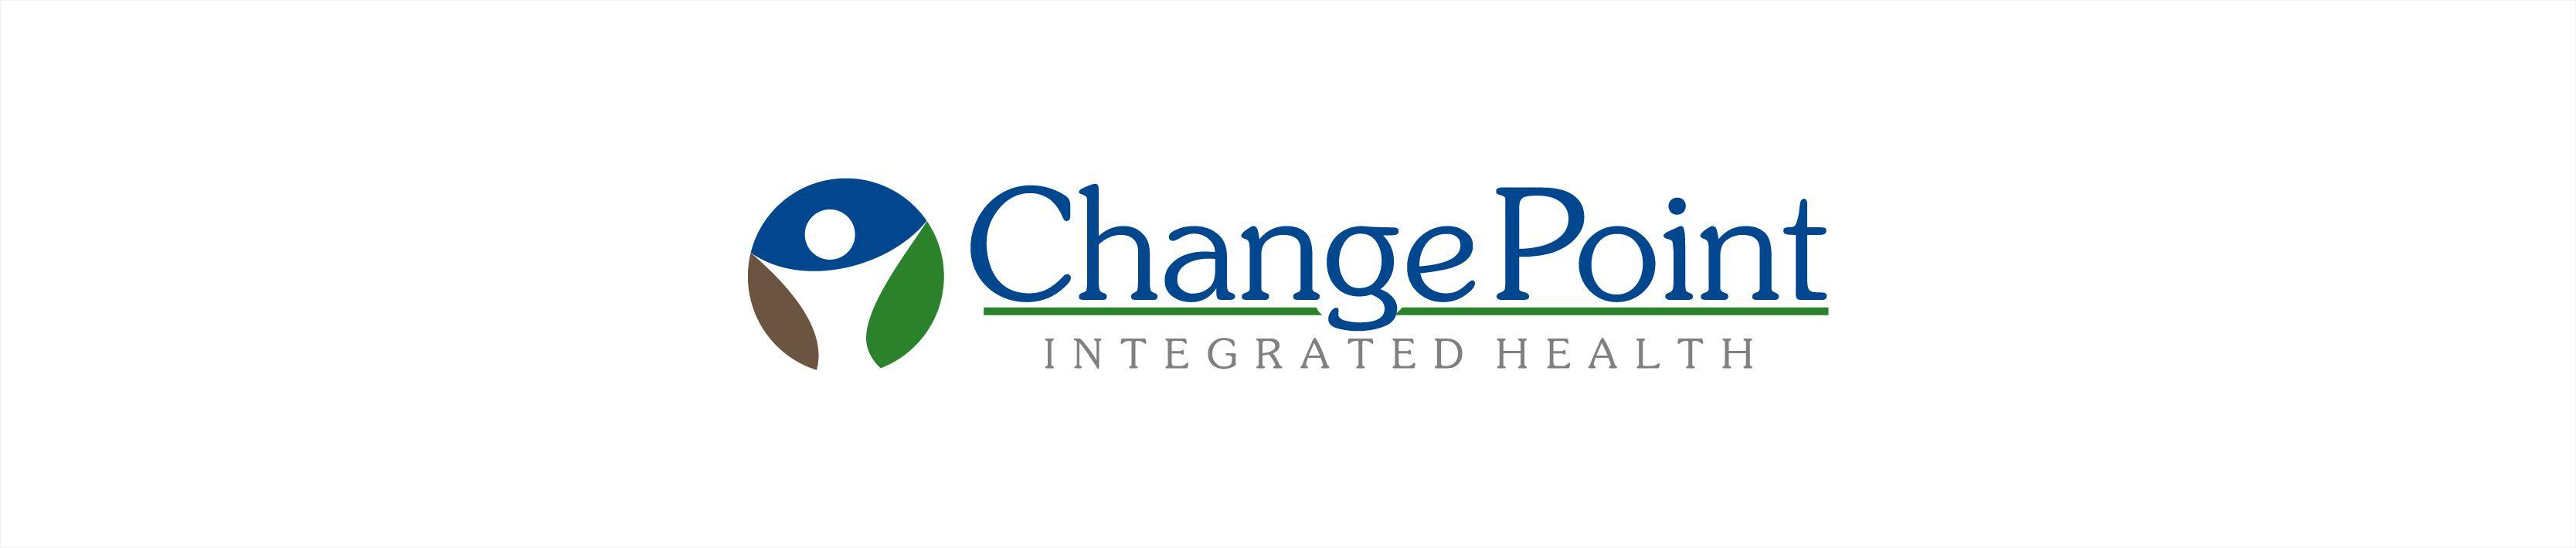 Changepoint Logo - mychangepoint